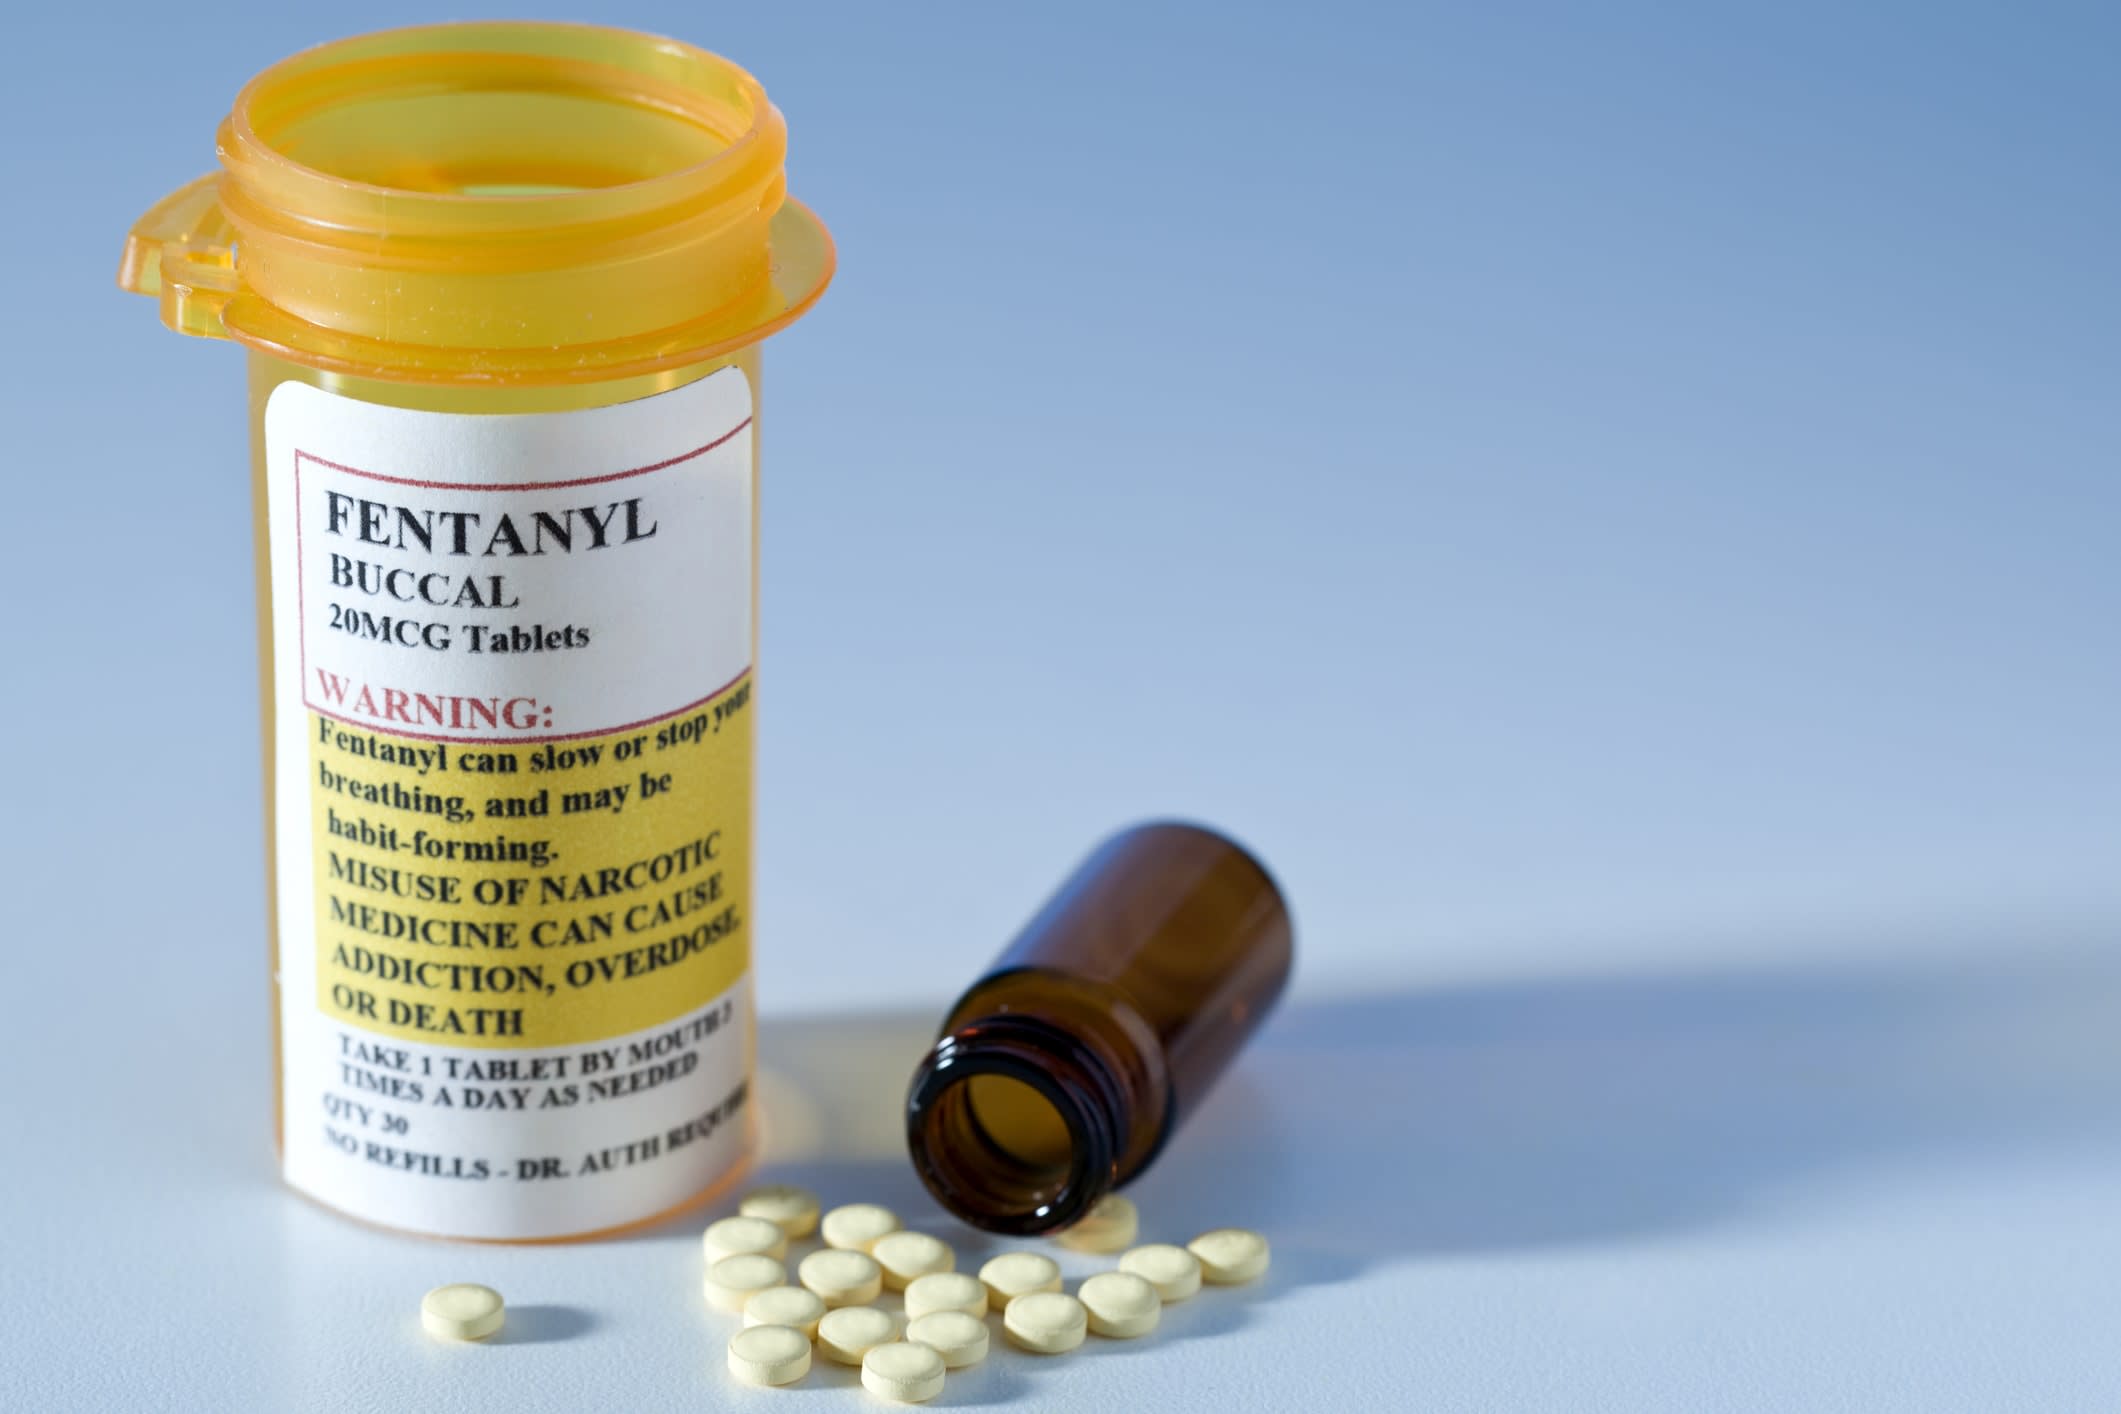 Is Australia Prepared for a Fentanyl Crisis? - Drug Policy Australia